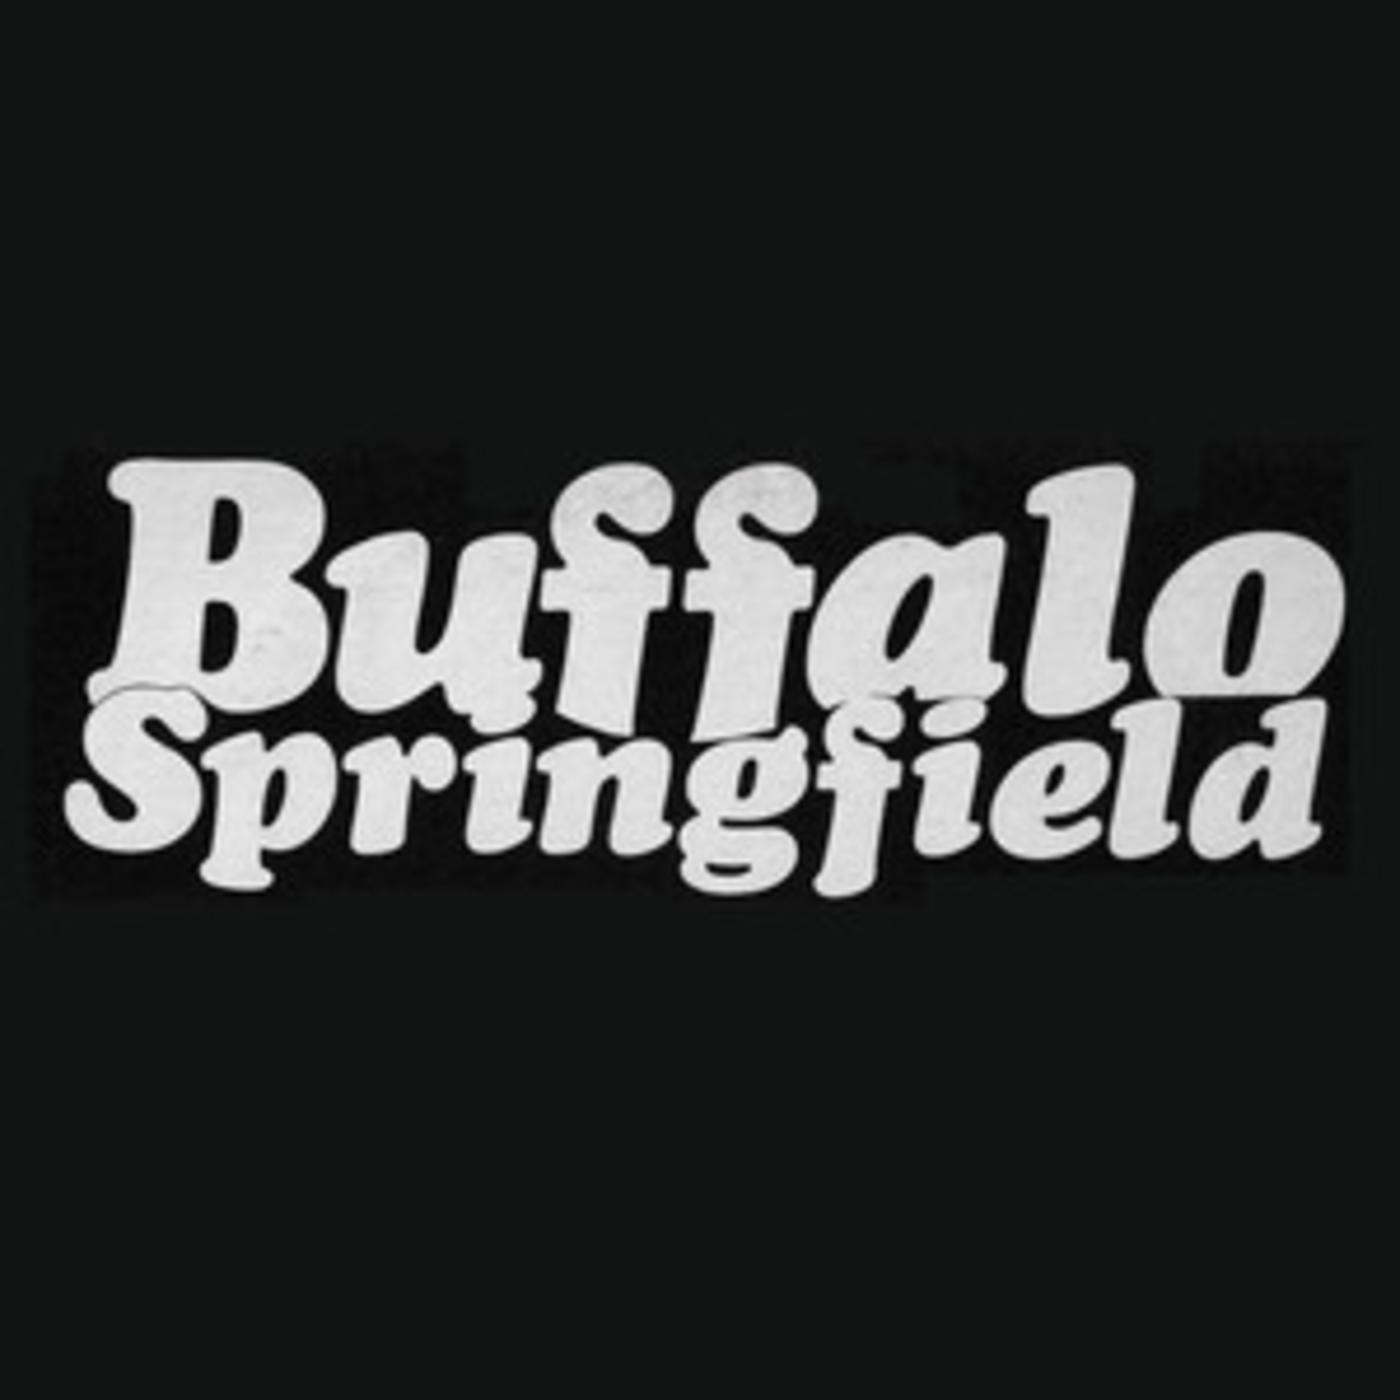 Buffalo Springfield - Official Playlist - For What It's Worth, Mr Soul, Hot Dusty Roads, Bluebird